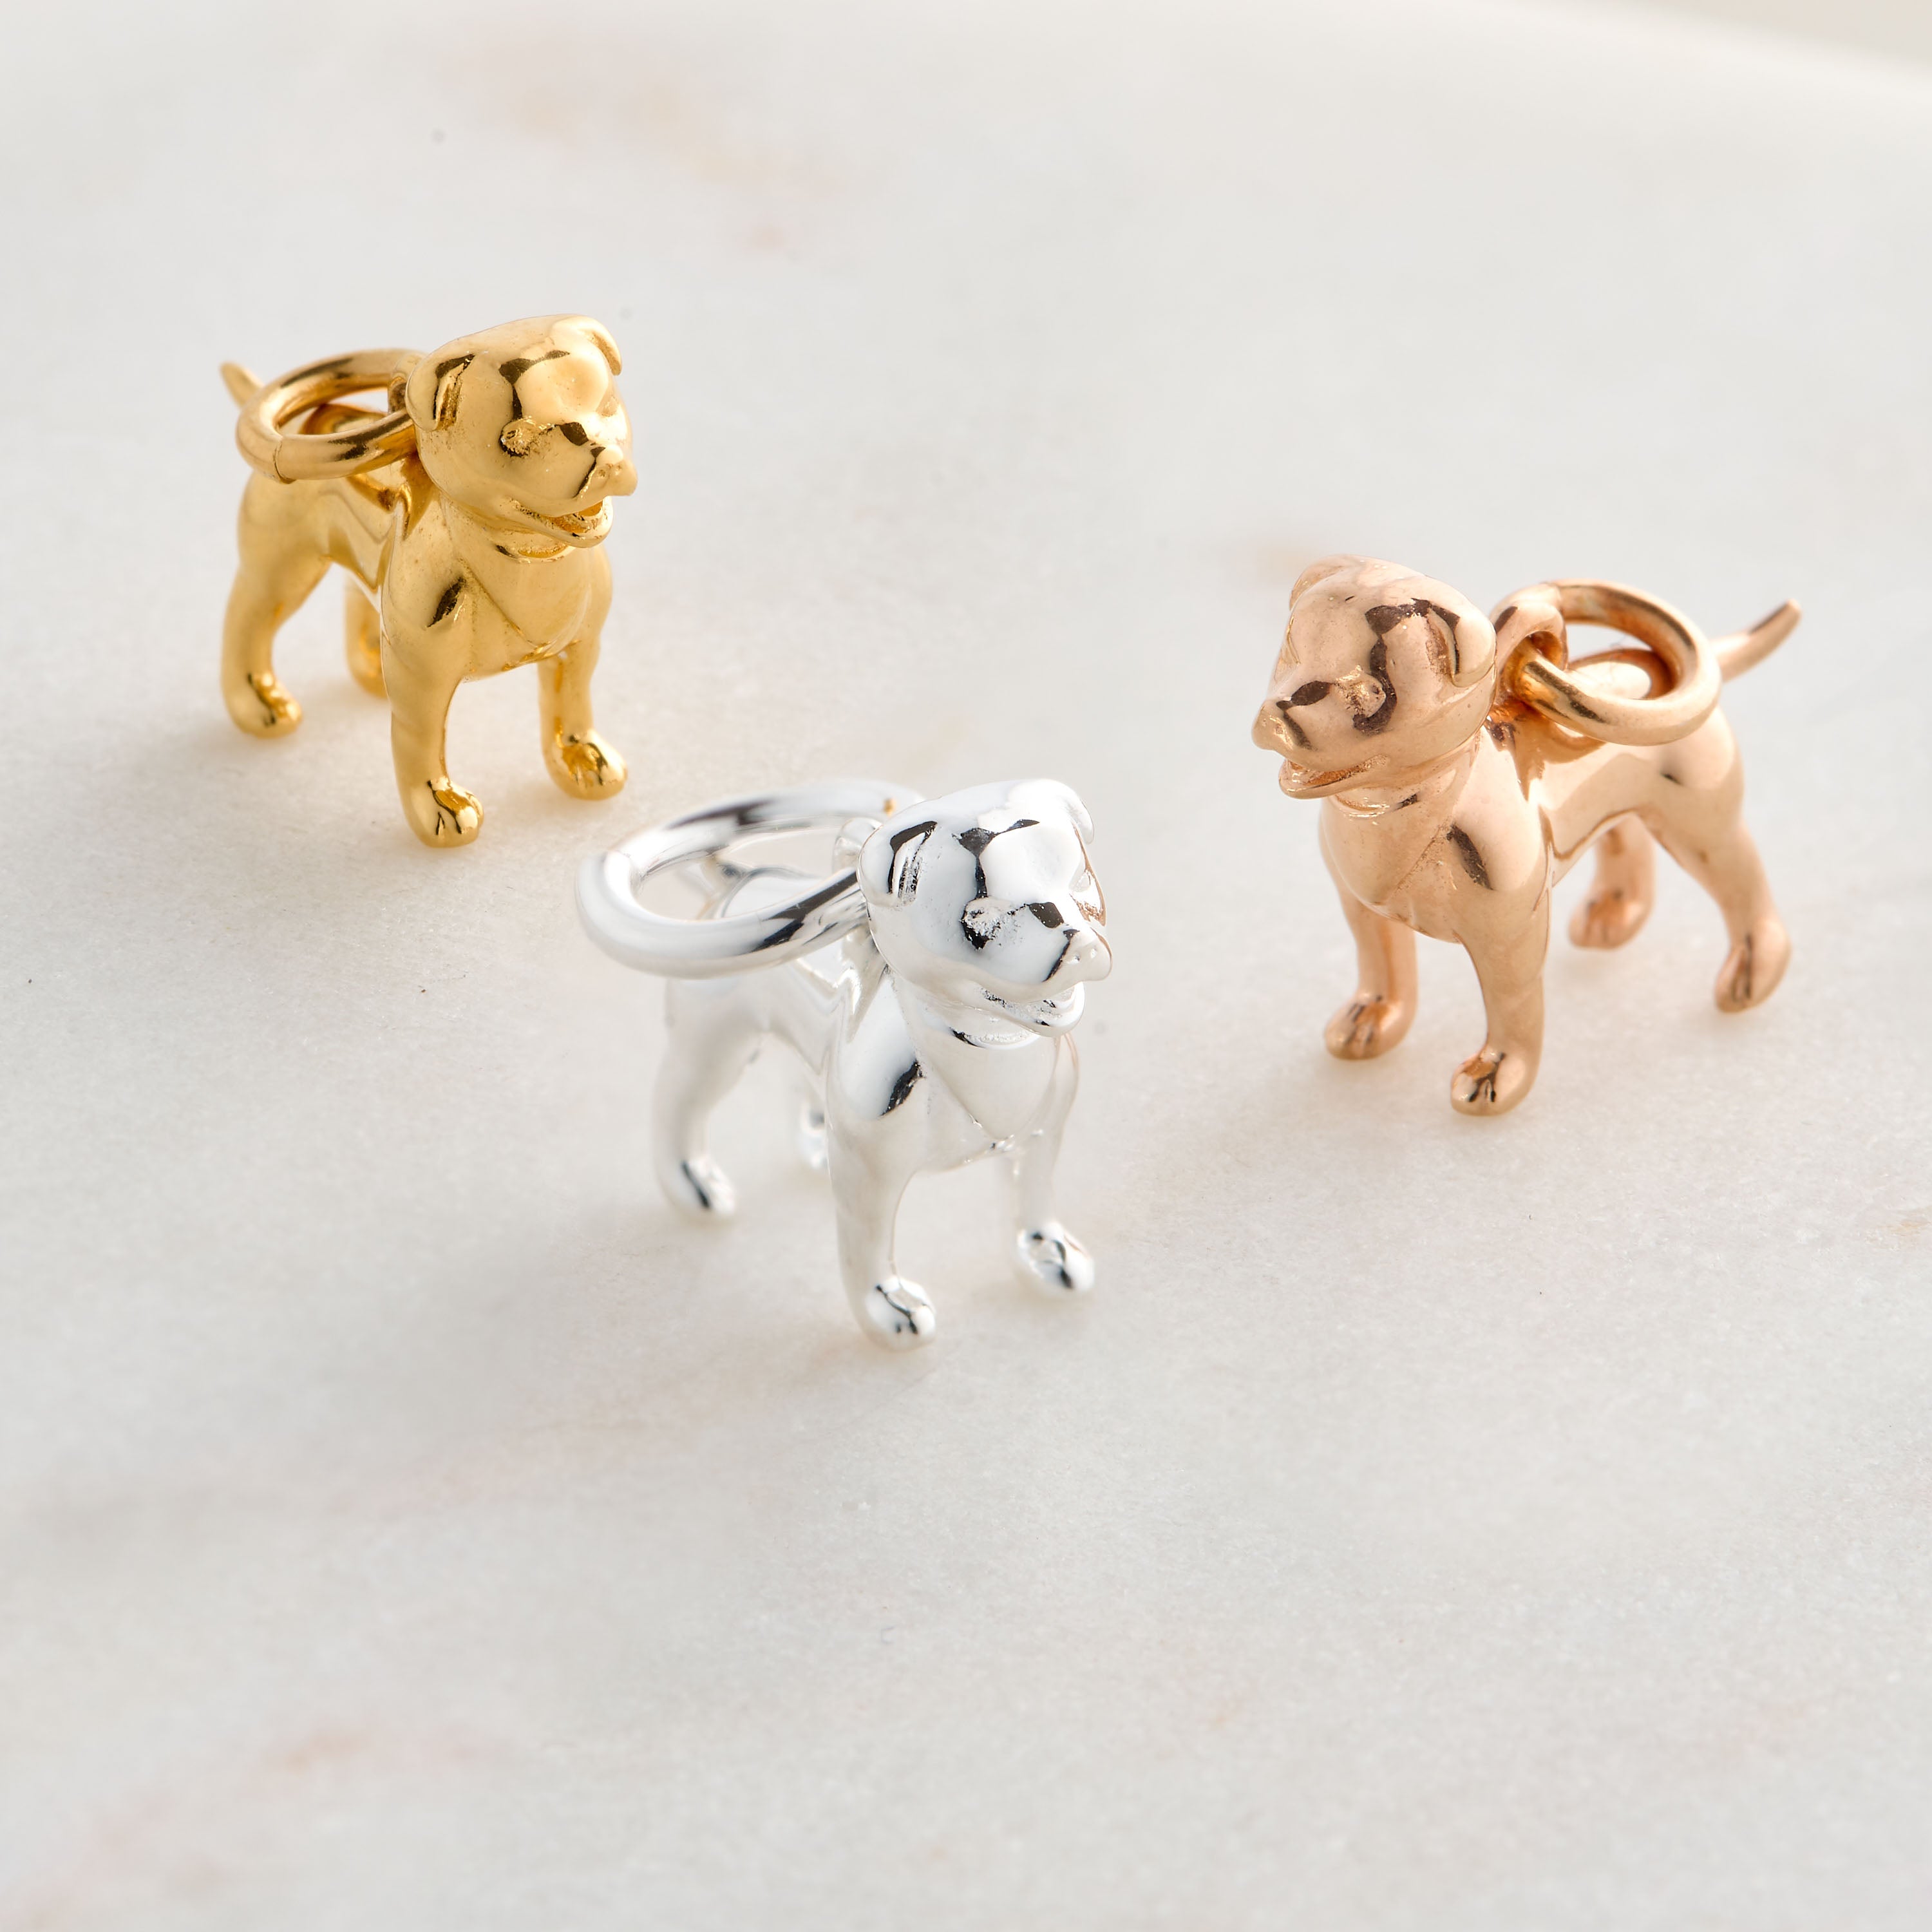 staffy gold dog charm scarlett jewellery